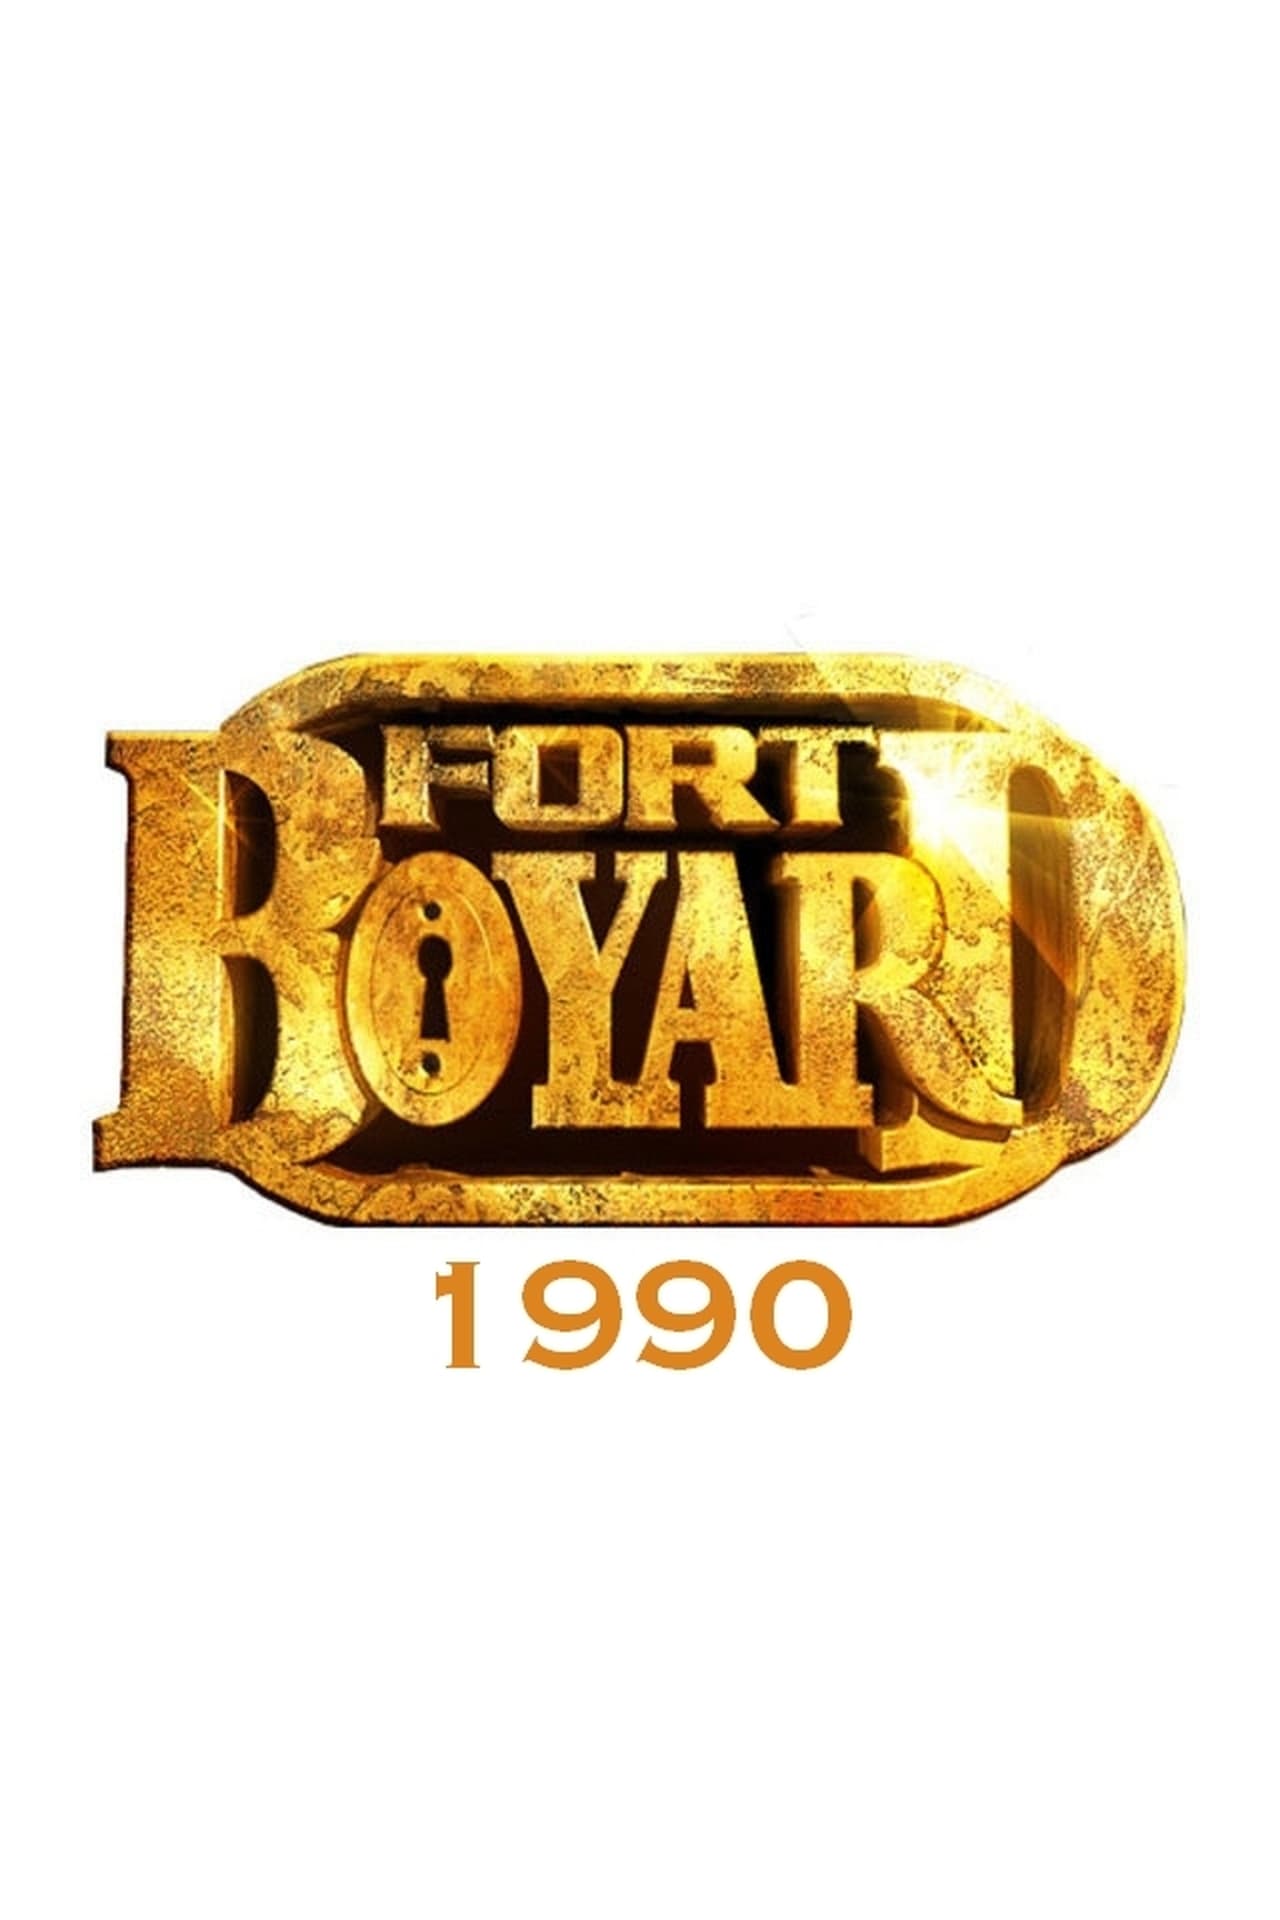 Fort Boyard (1990)